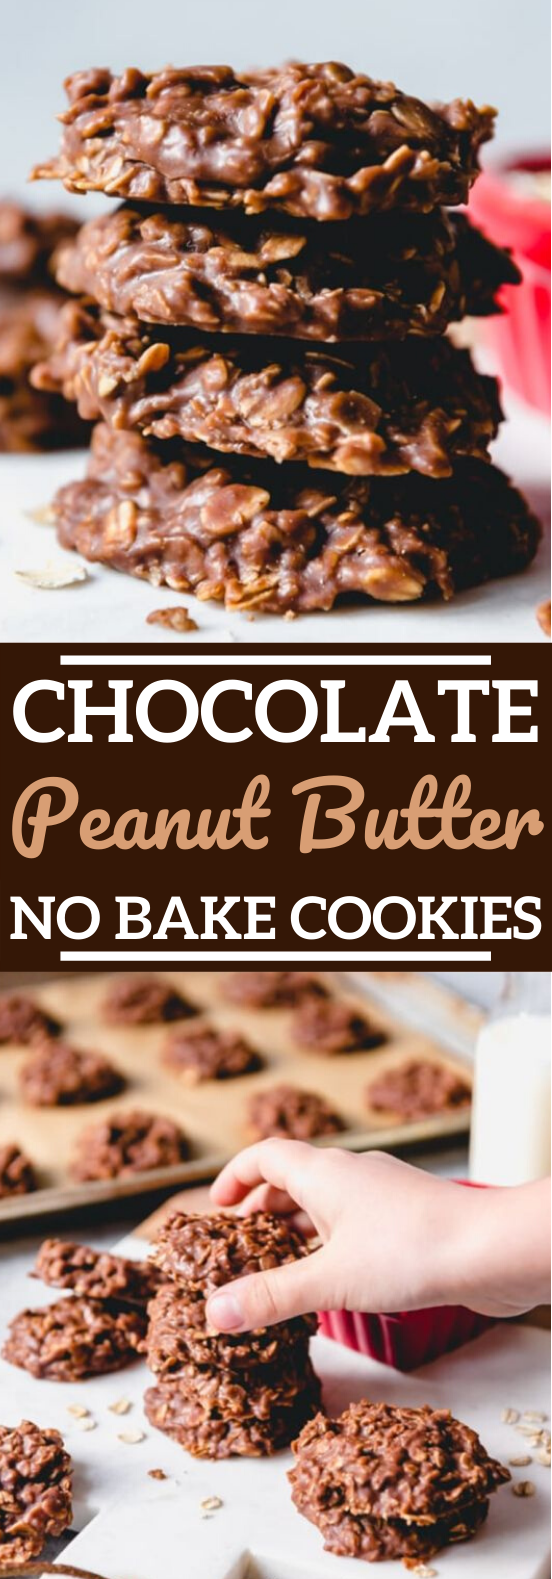 Chocolate Peanut Butter No Bake Cookies #cookies #nobake #chocolate #desserts #snacks